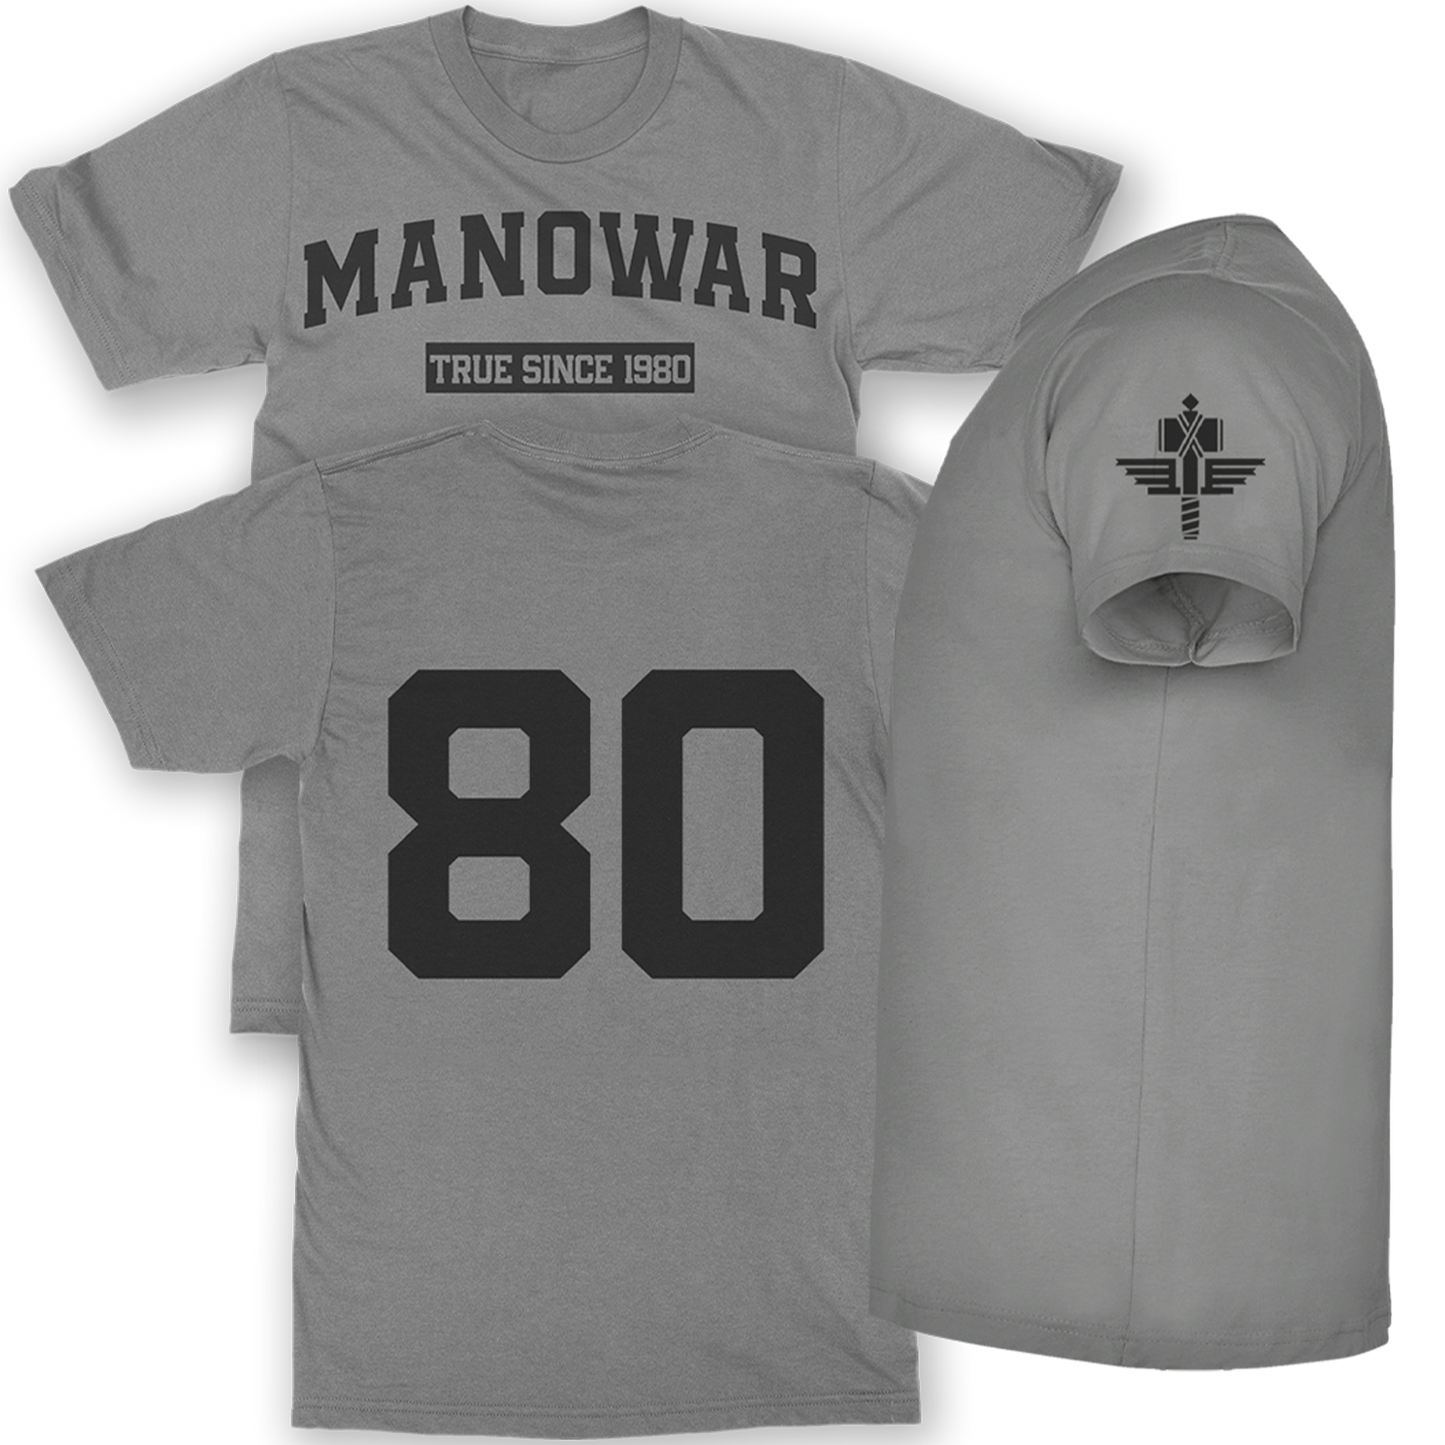 Manowar T-Shirt True Since 1980 grey with logo